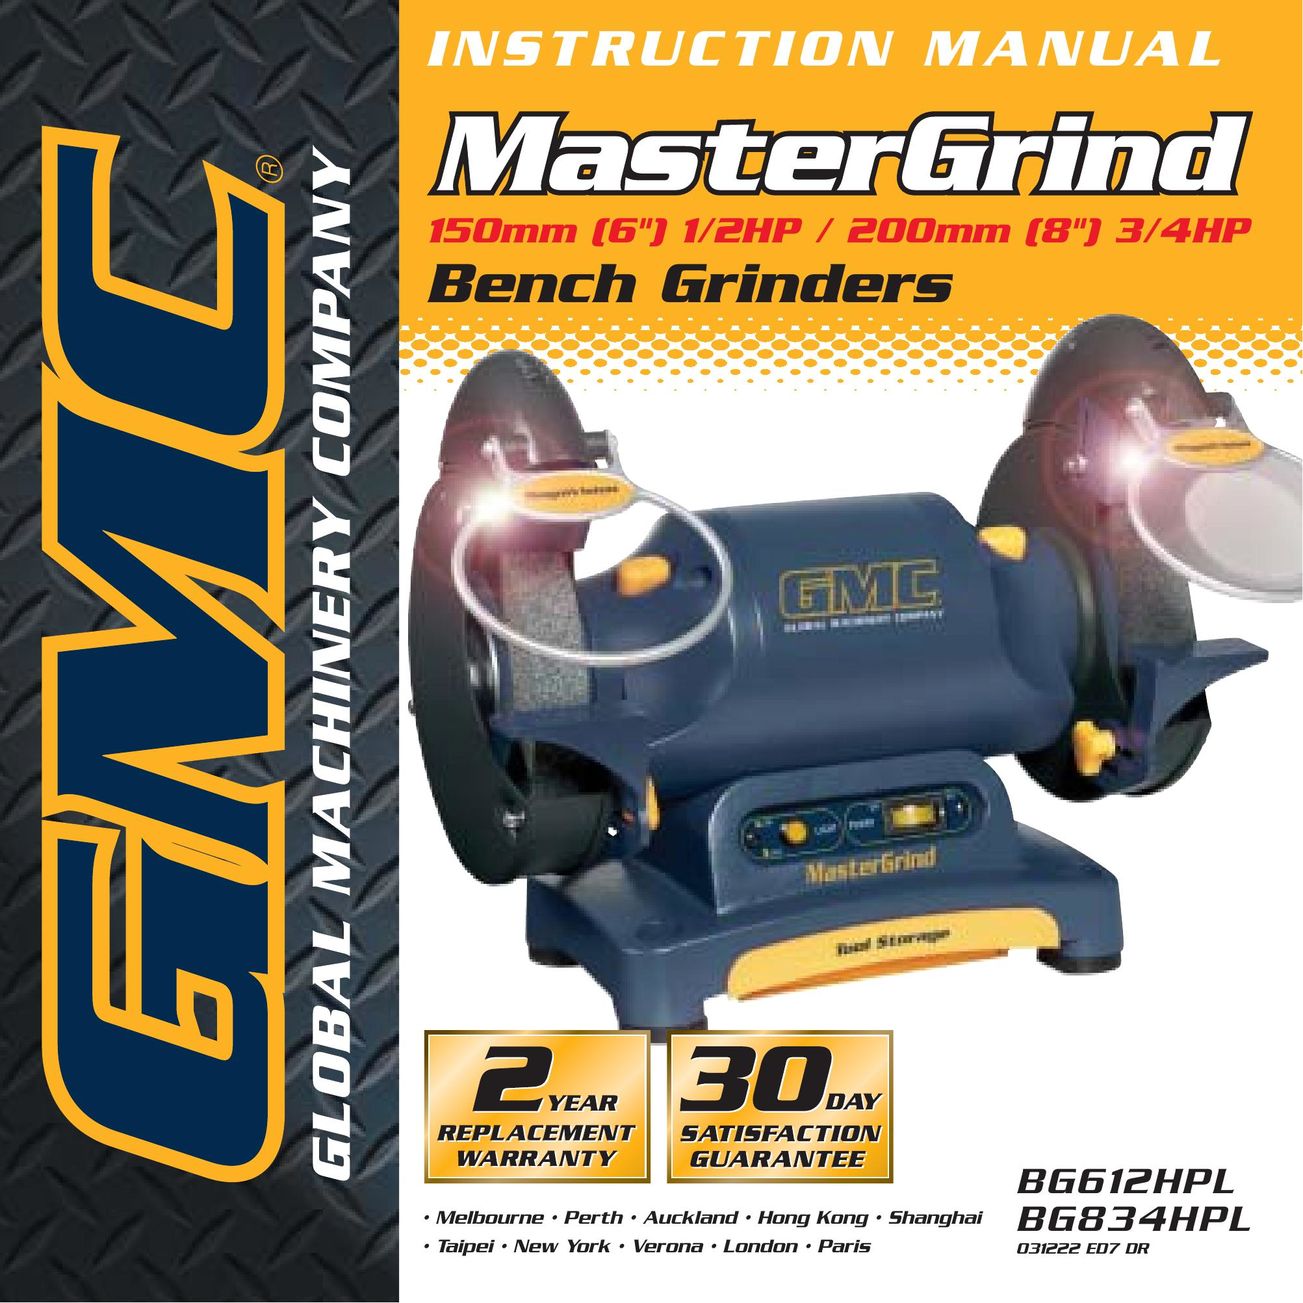 Global Machinery Company BG612HPL Grinder User Manual